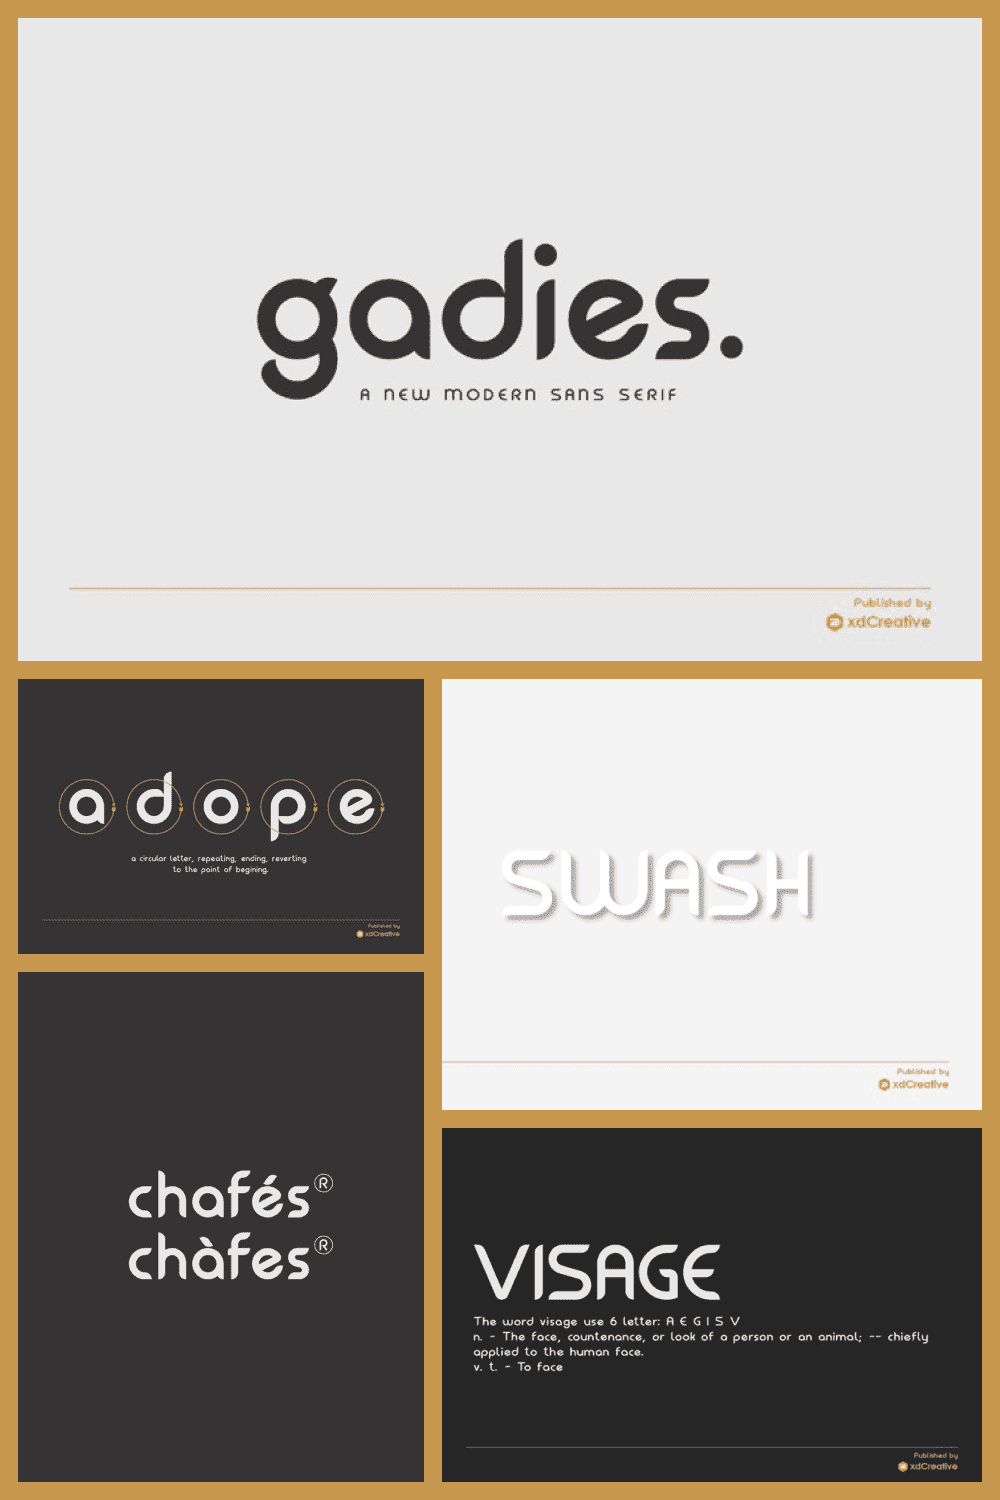 Gadies is a modern sans serif font.